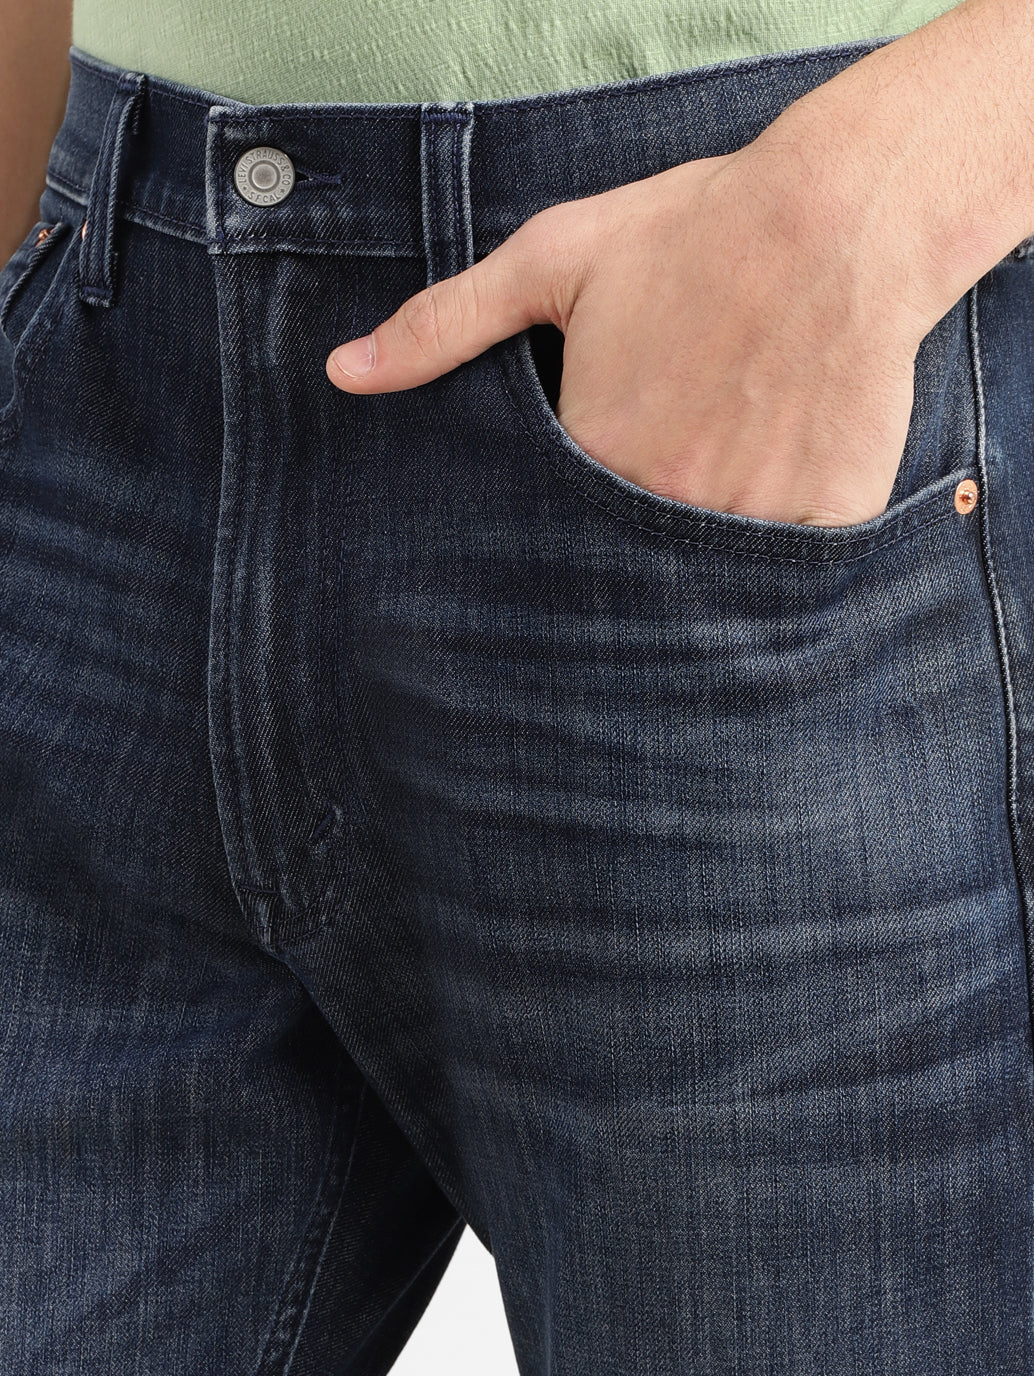 Men's 551Z Dark Indigo Loose Straight Fit Jeans